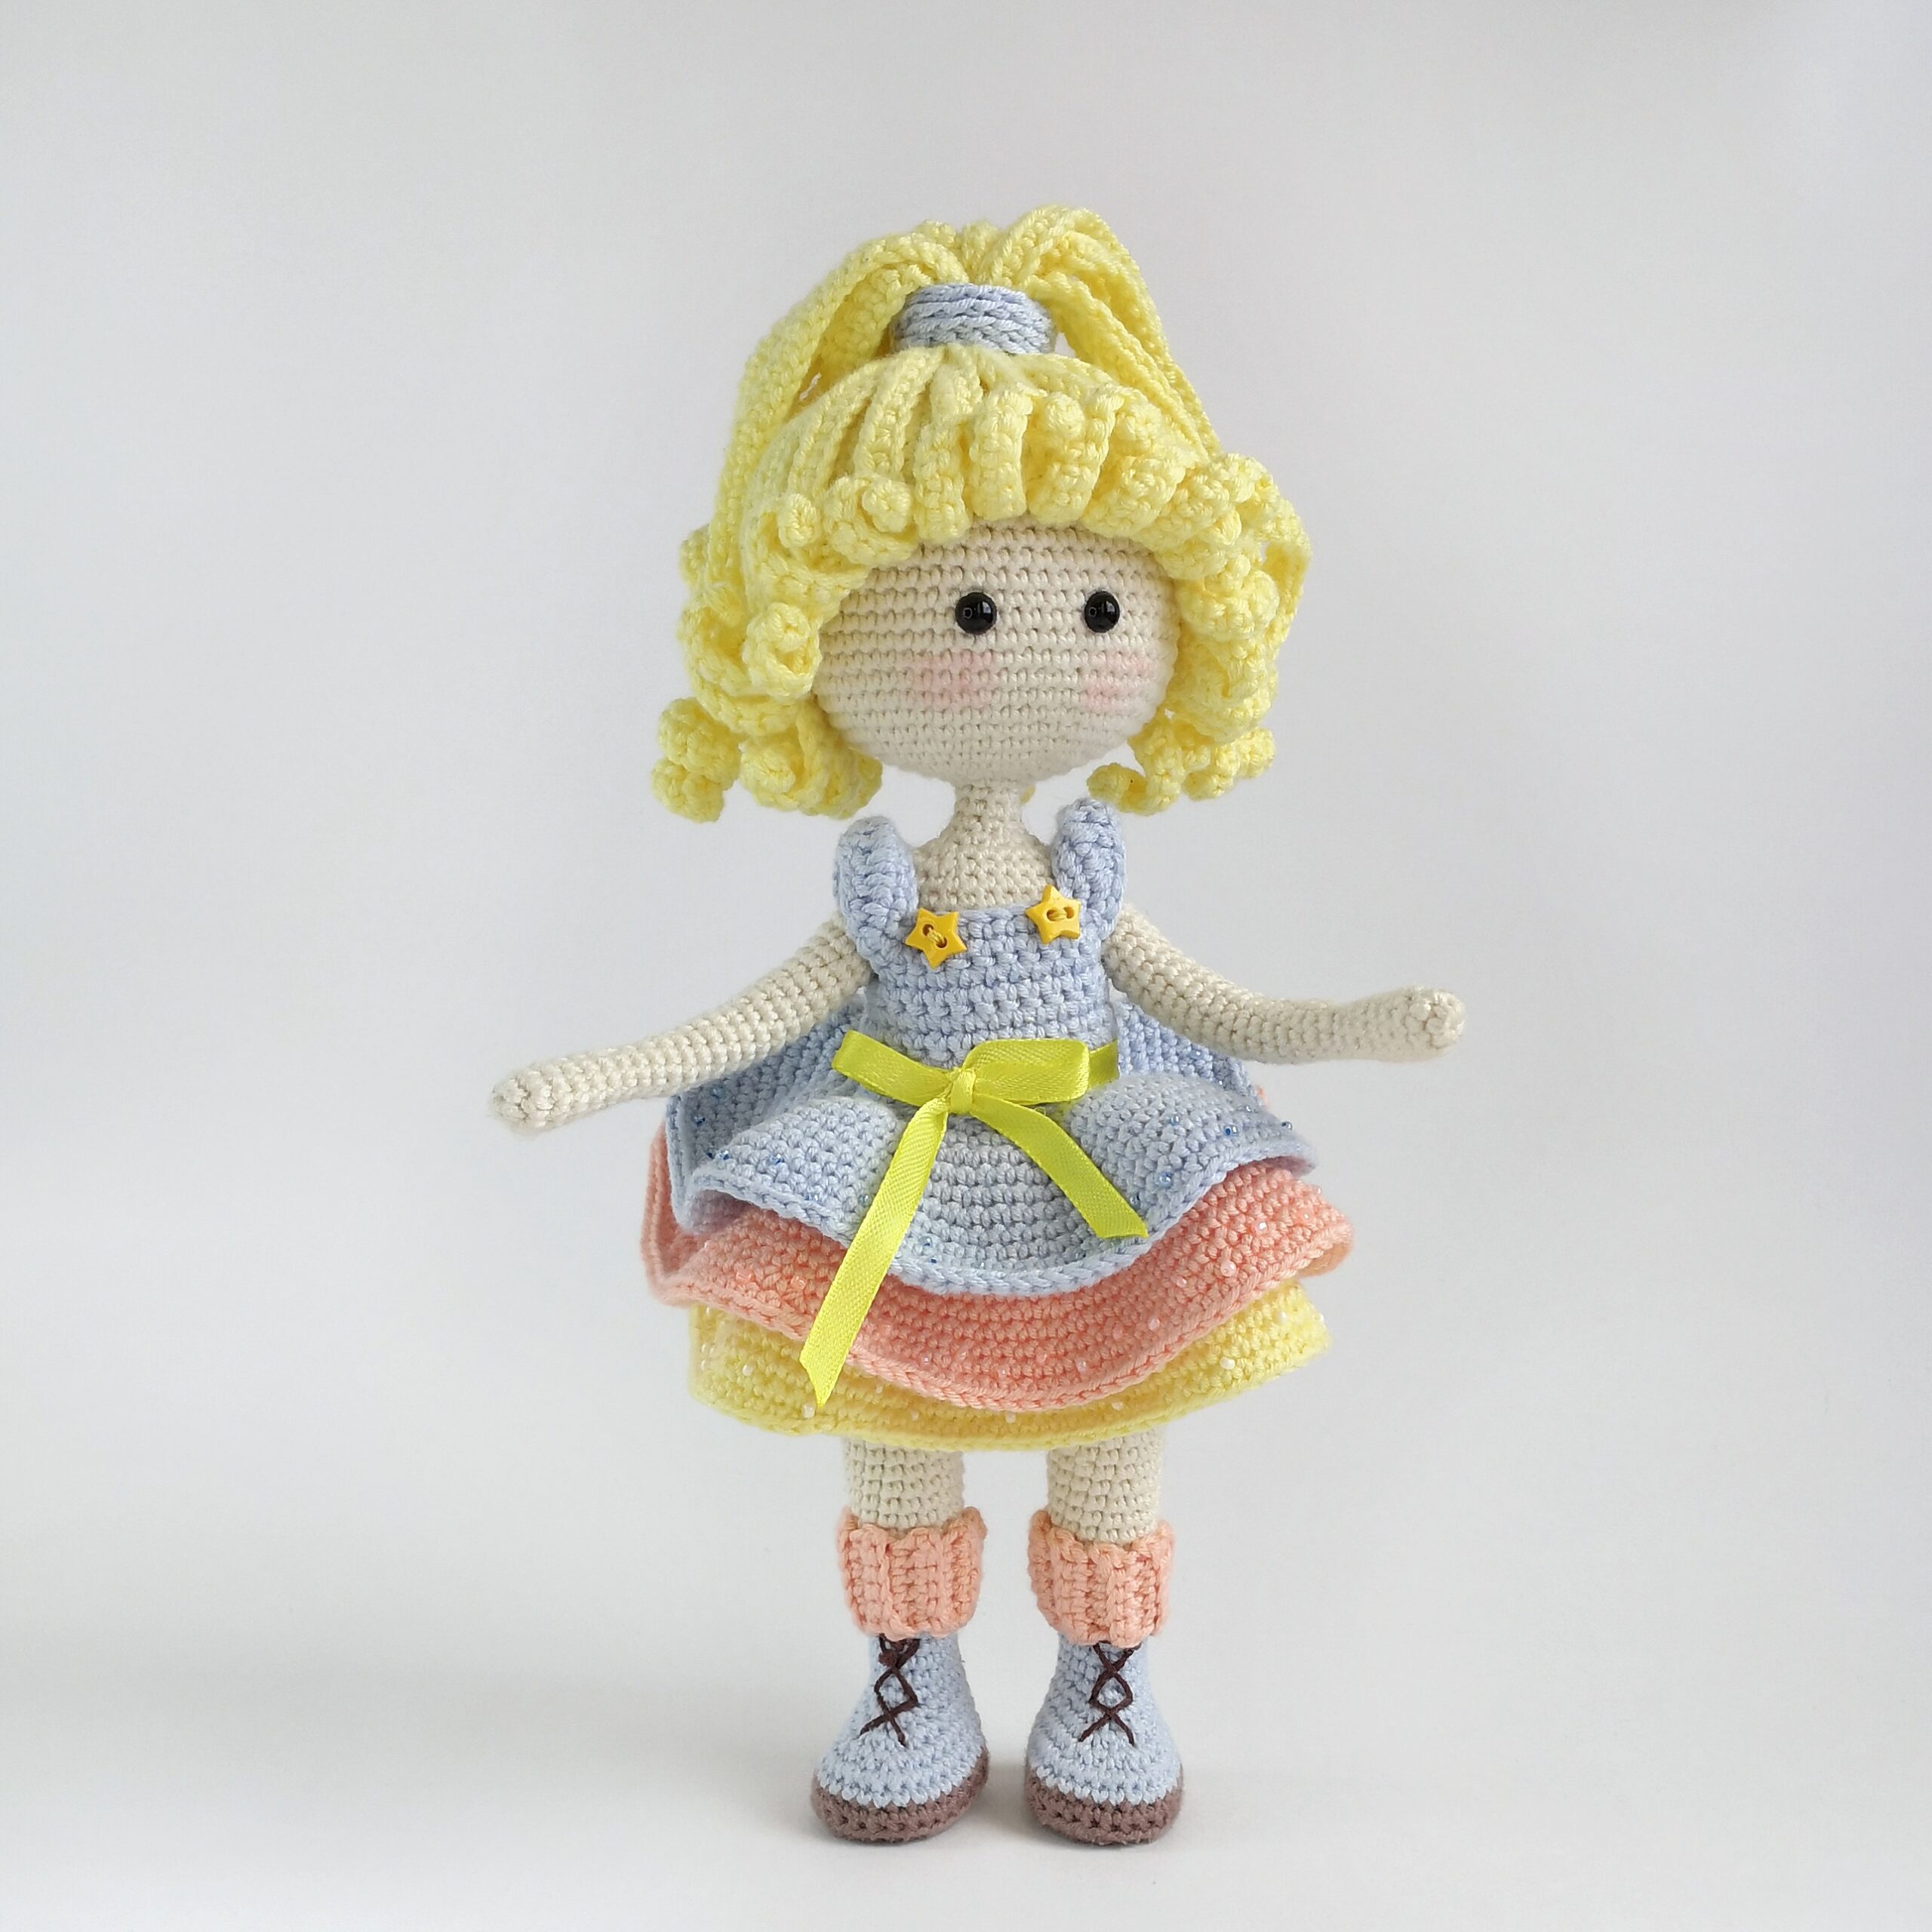 Doll clothes crochet pattern,Princess outfit in English, Deutsch, Français,  Spanish /Español - DailyDoll Shop